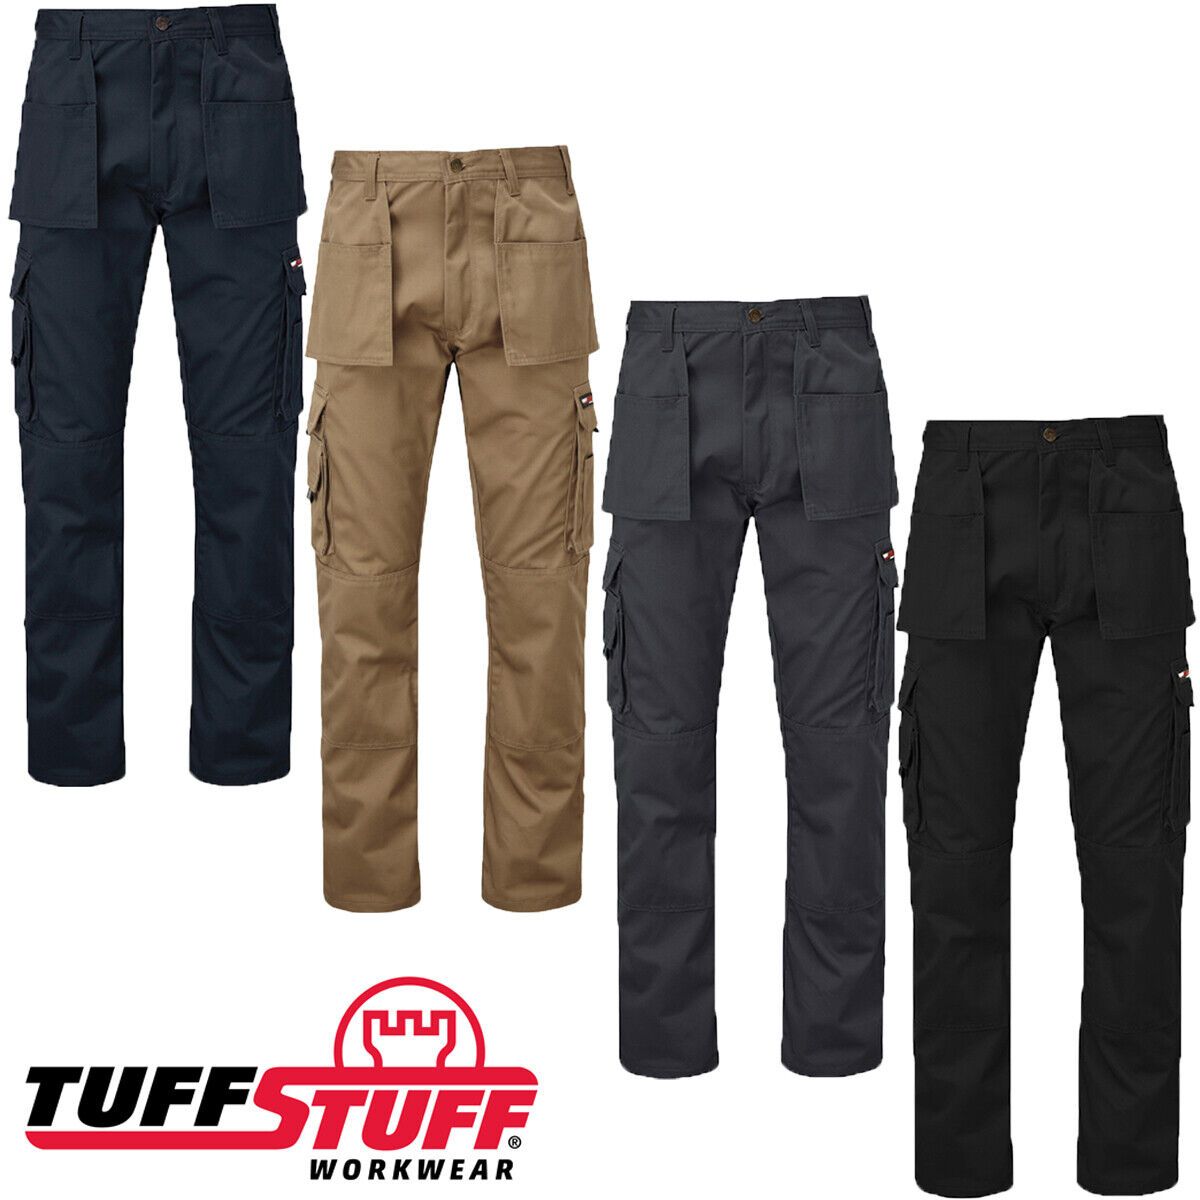 TuffStuff - Elite Work Trouser - Black Cargo Trousers - 28